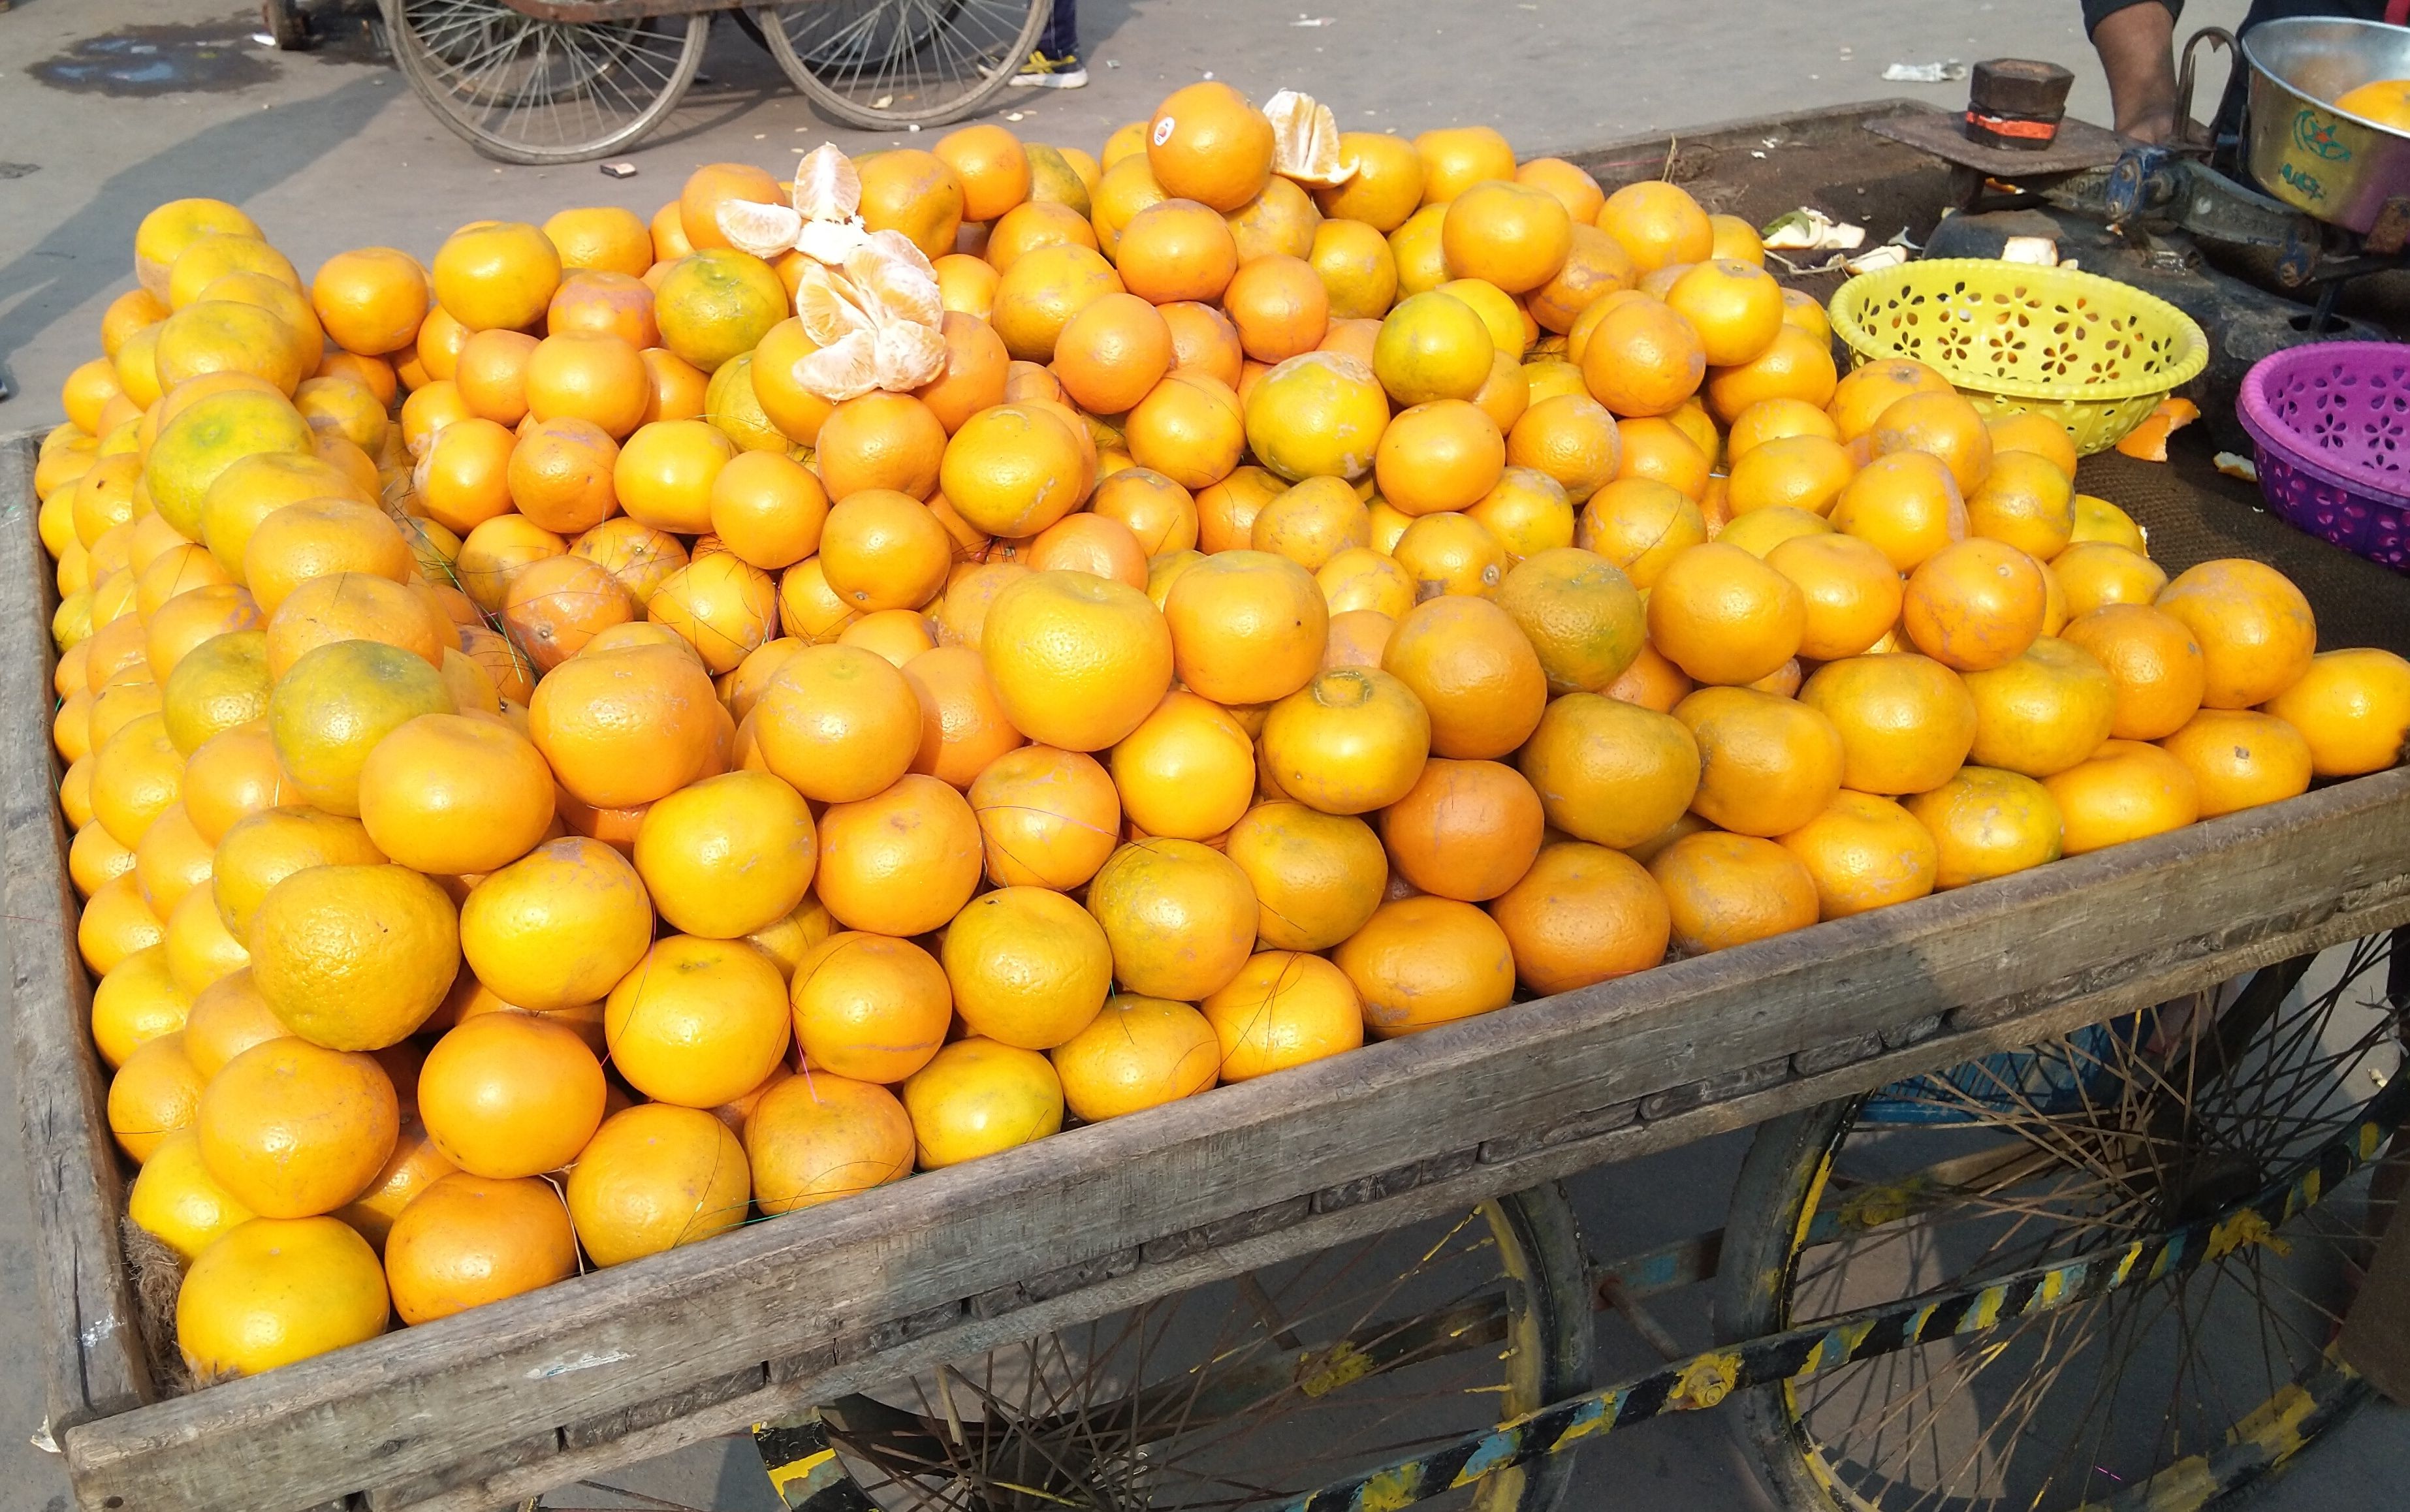 Sweet Orange also known as kinnu here. Full of vitamin c.